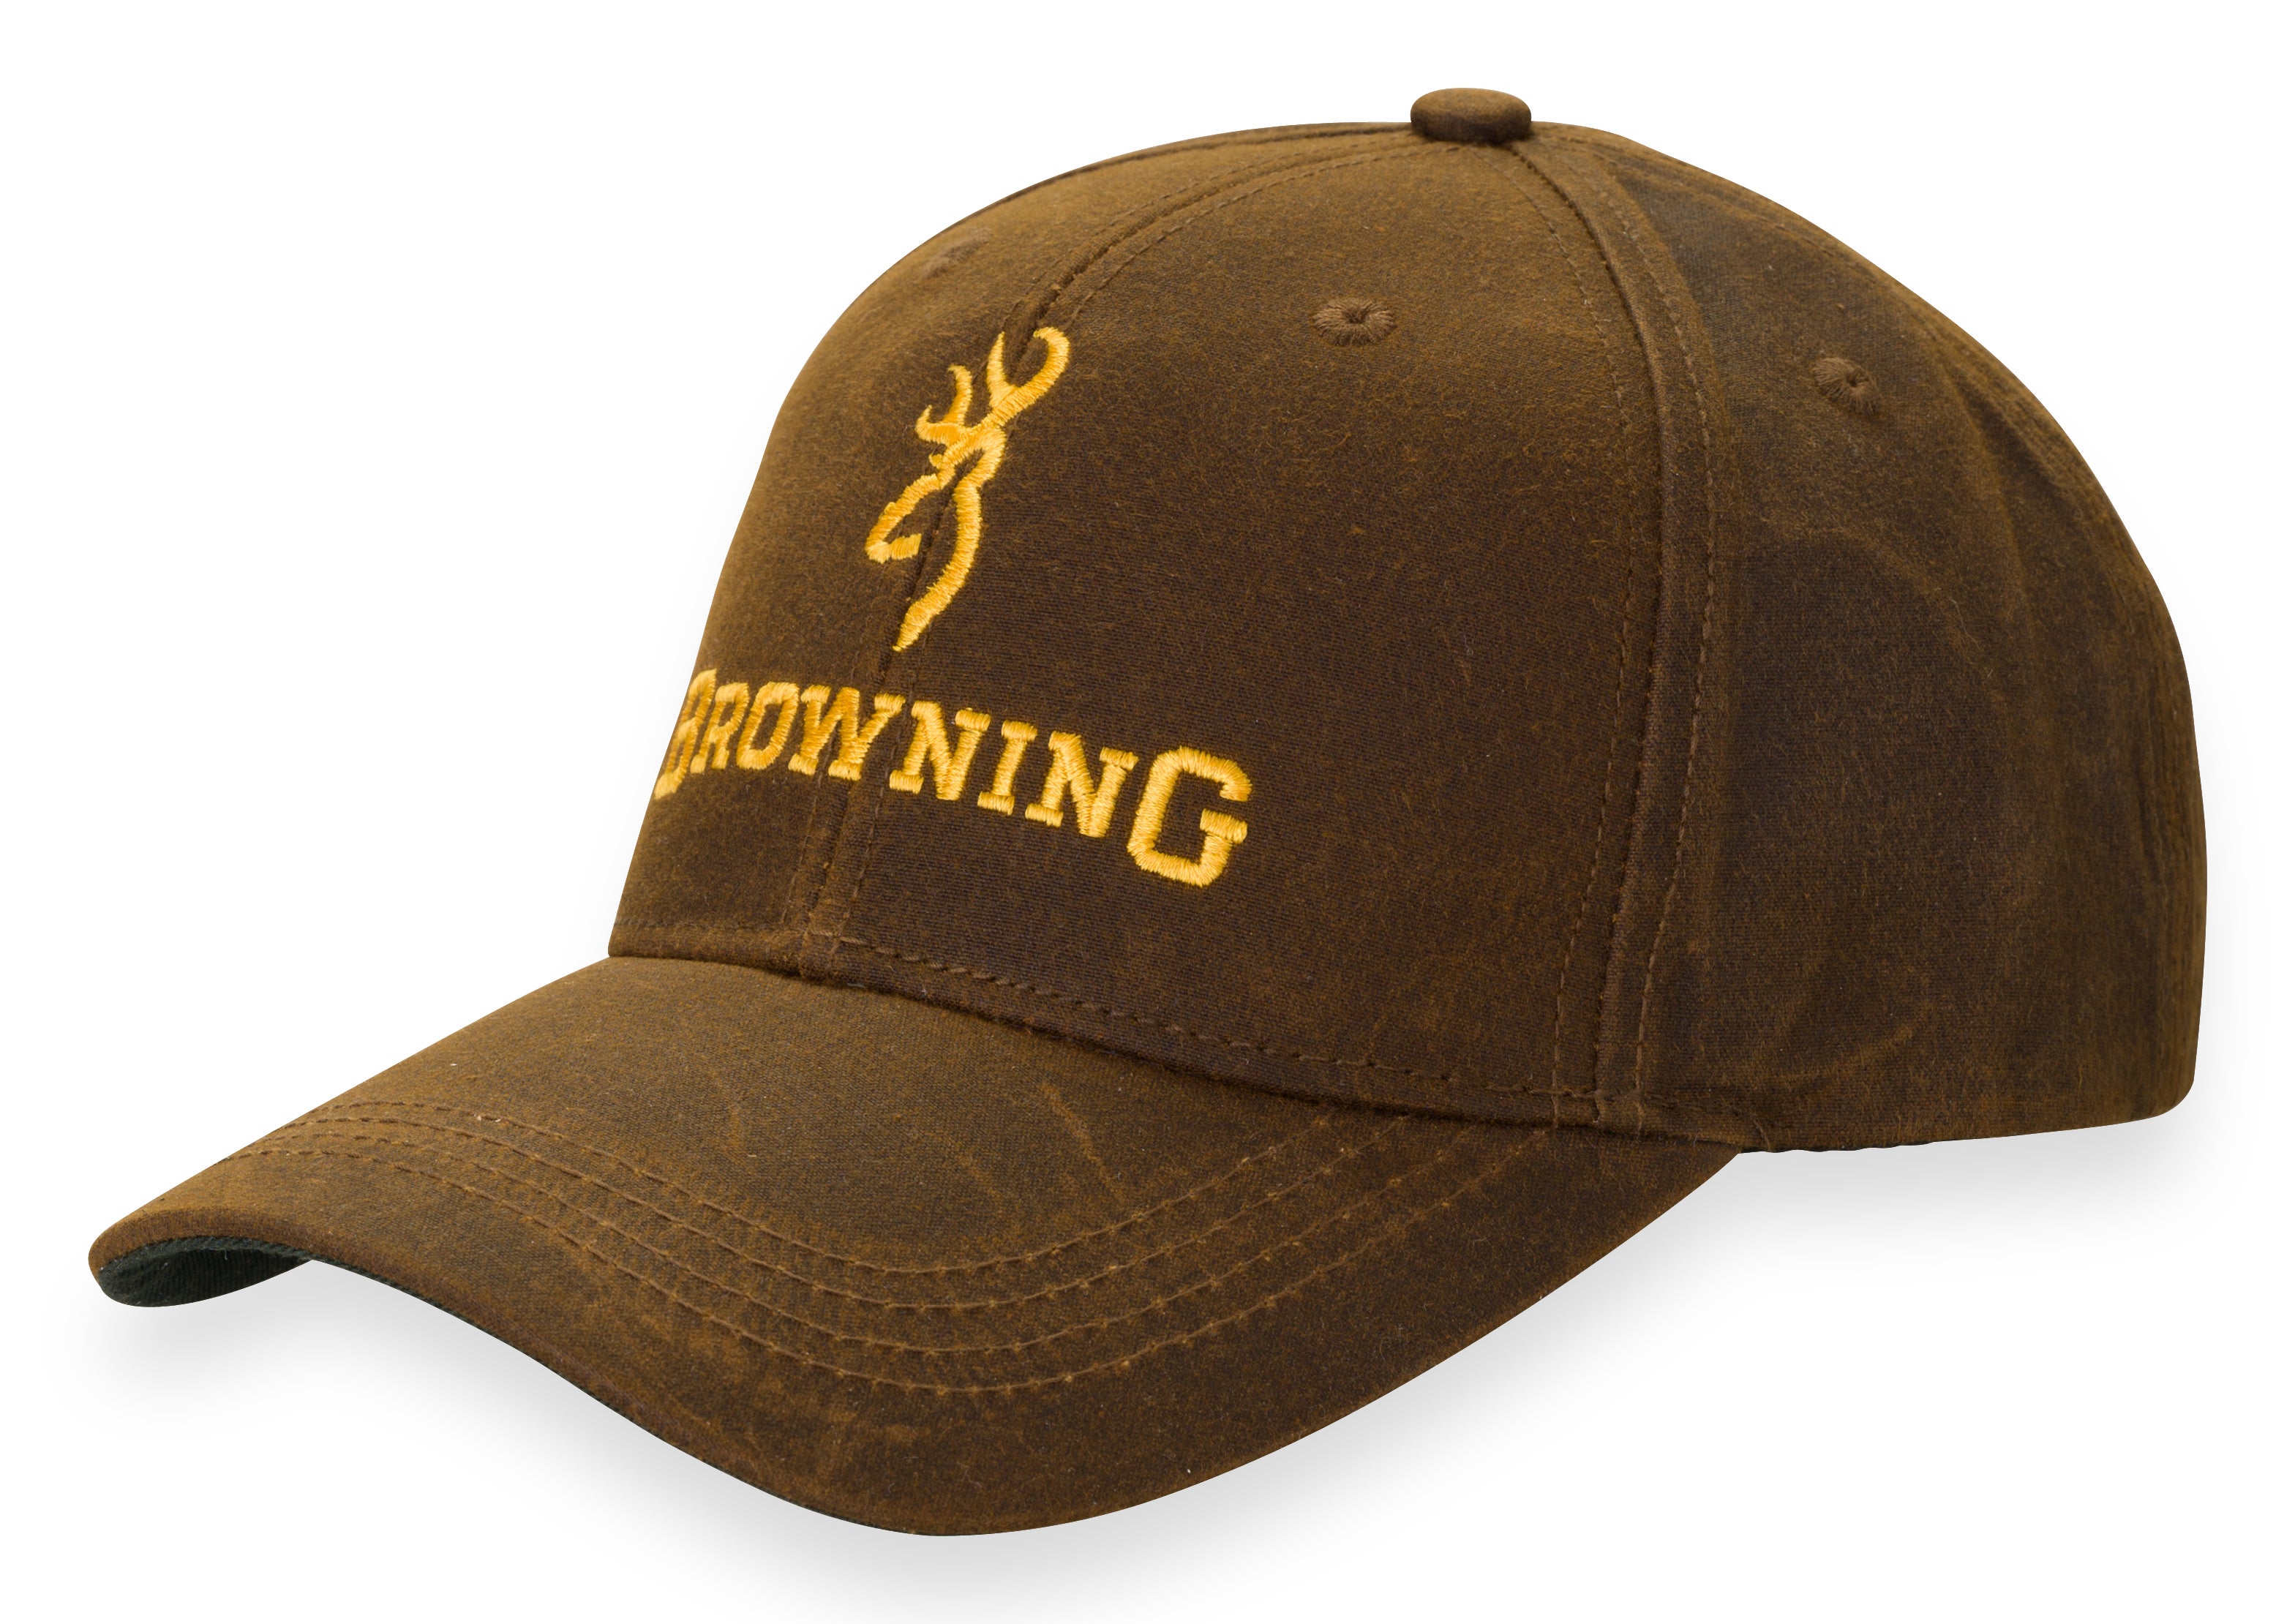 NEW BROWNING DURA WAX SOLID COLOR OLIVE BALL CAP HAT BUCKMARK LOGO ADJUSTABLE 